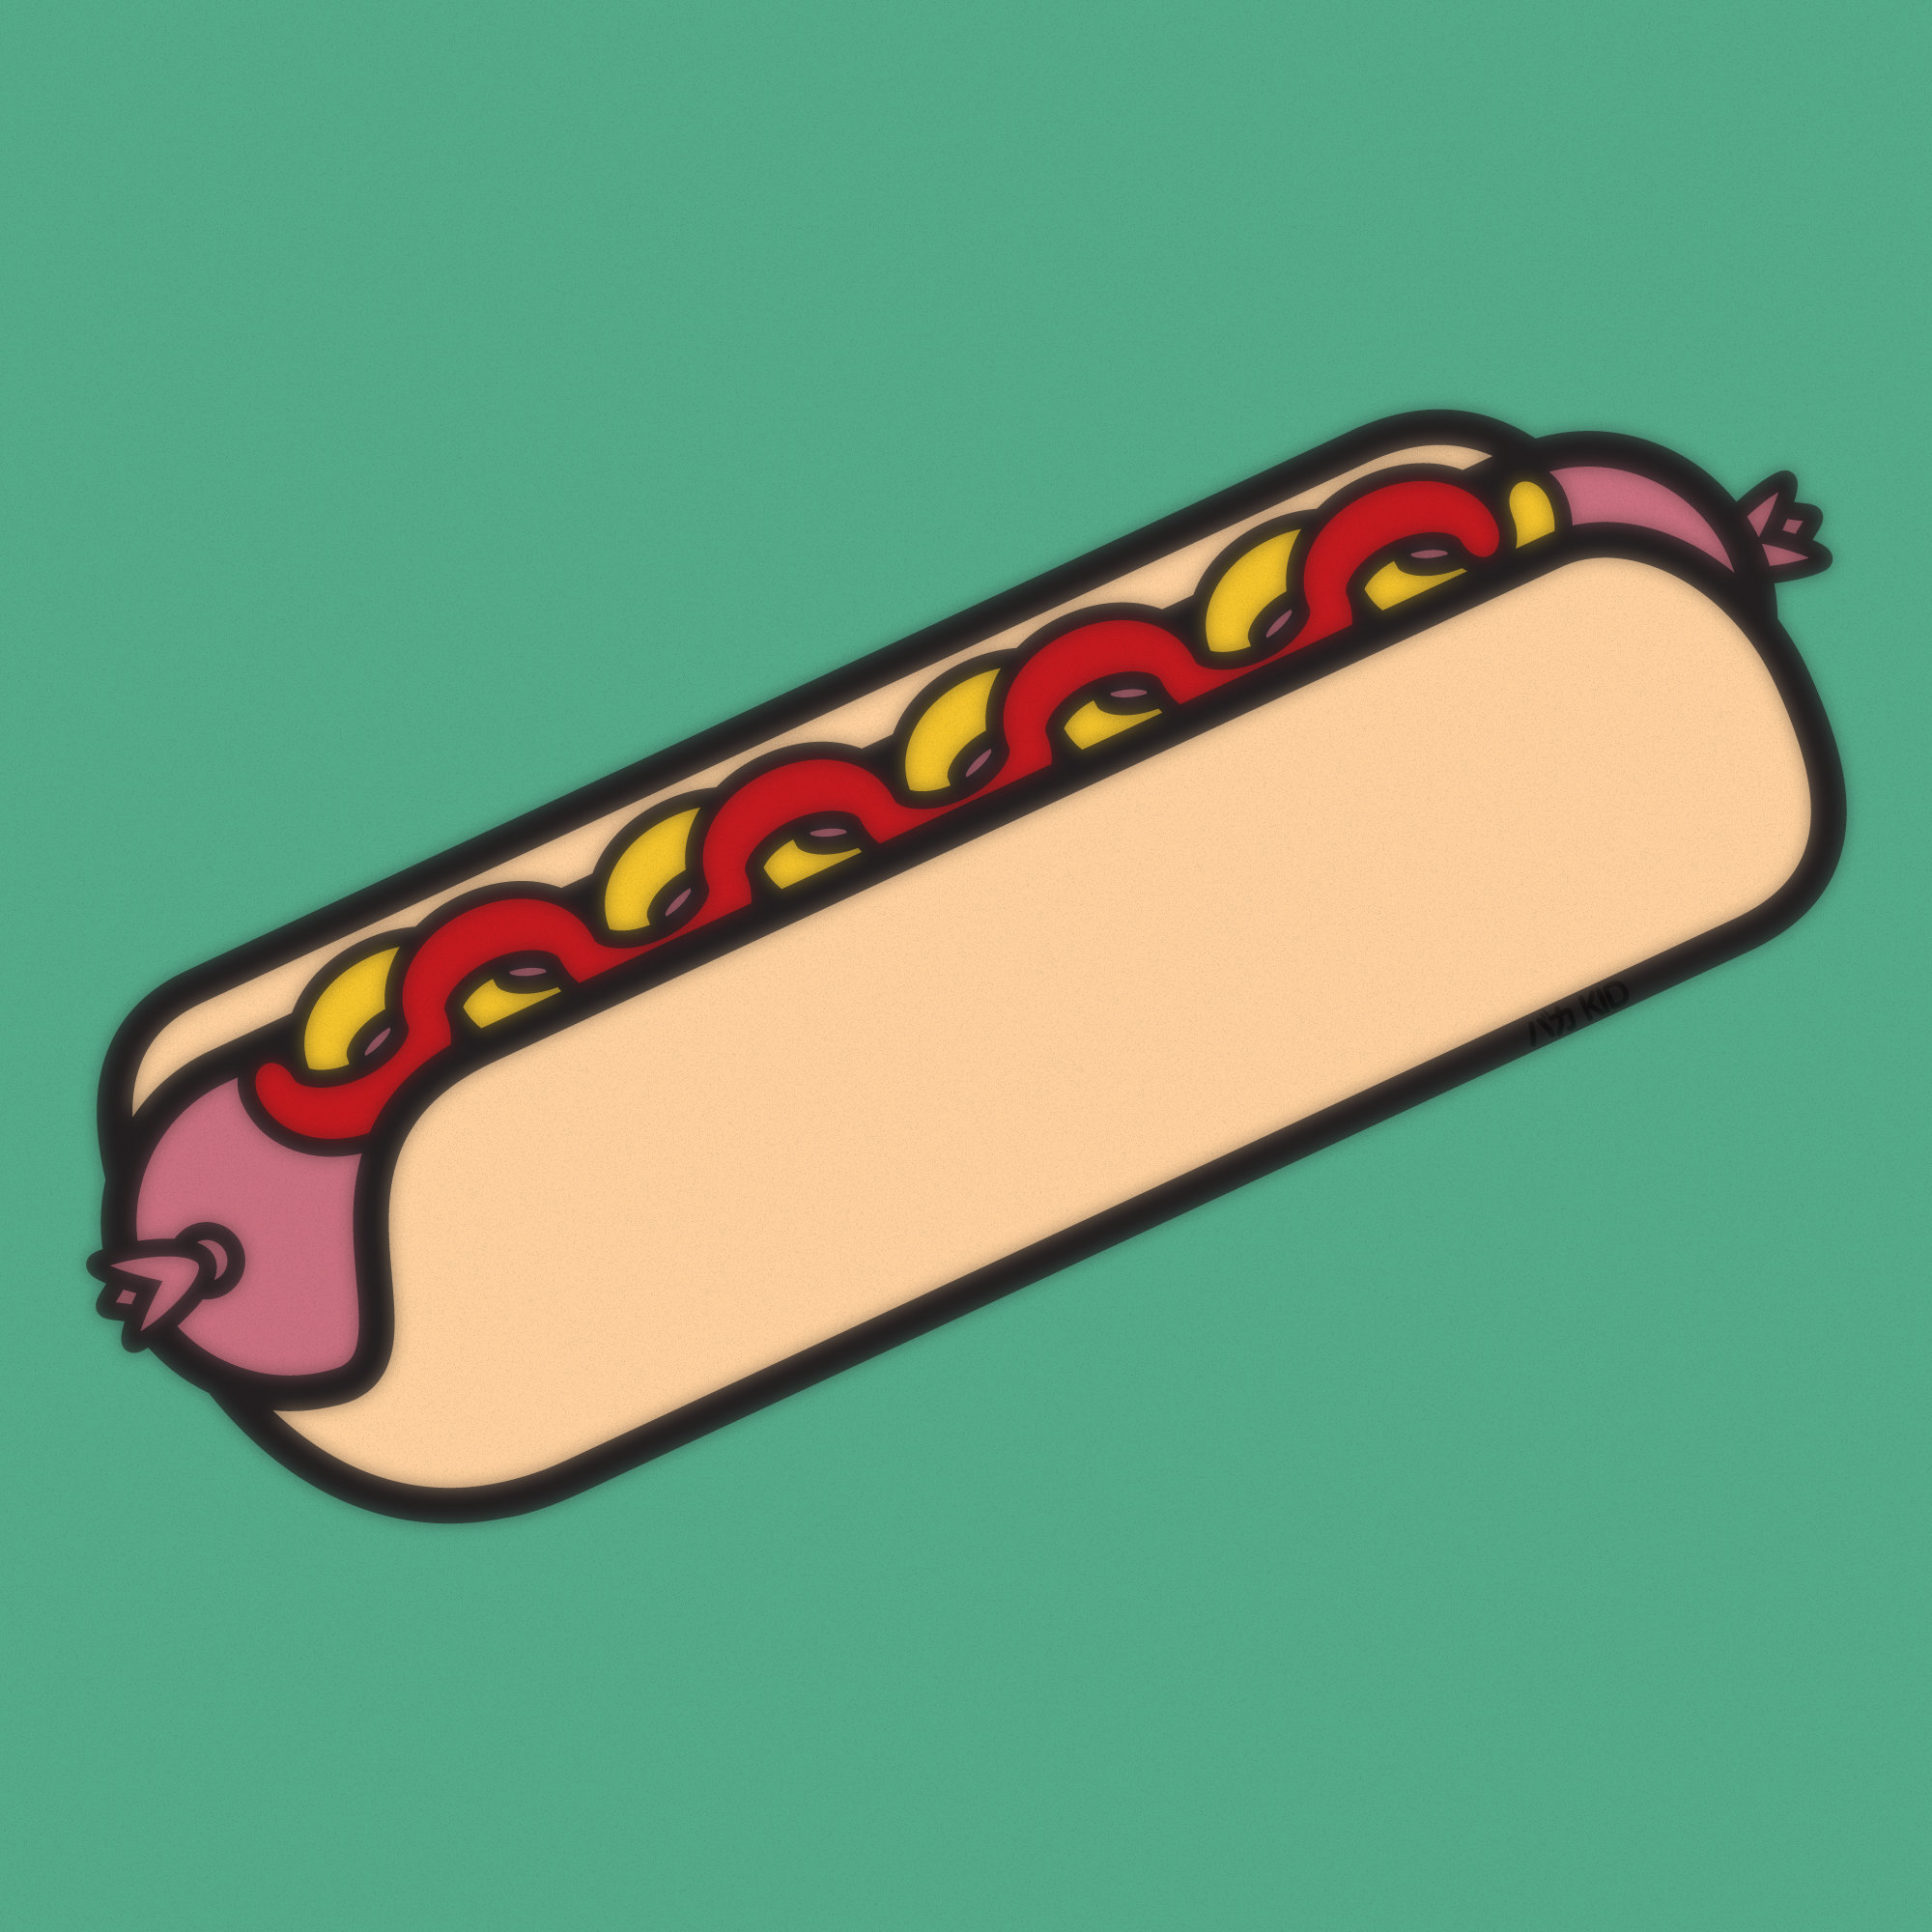 images/170228-Hotdog.jpg